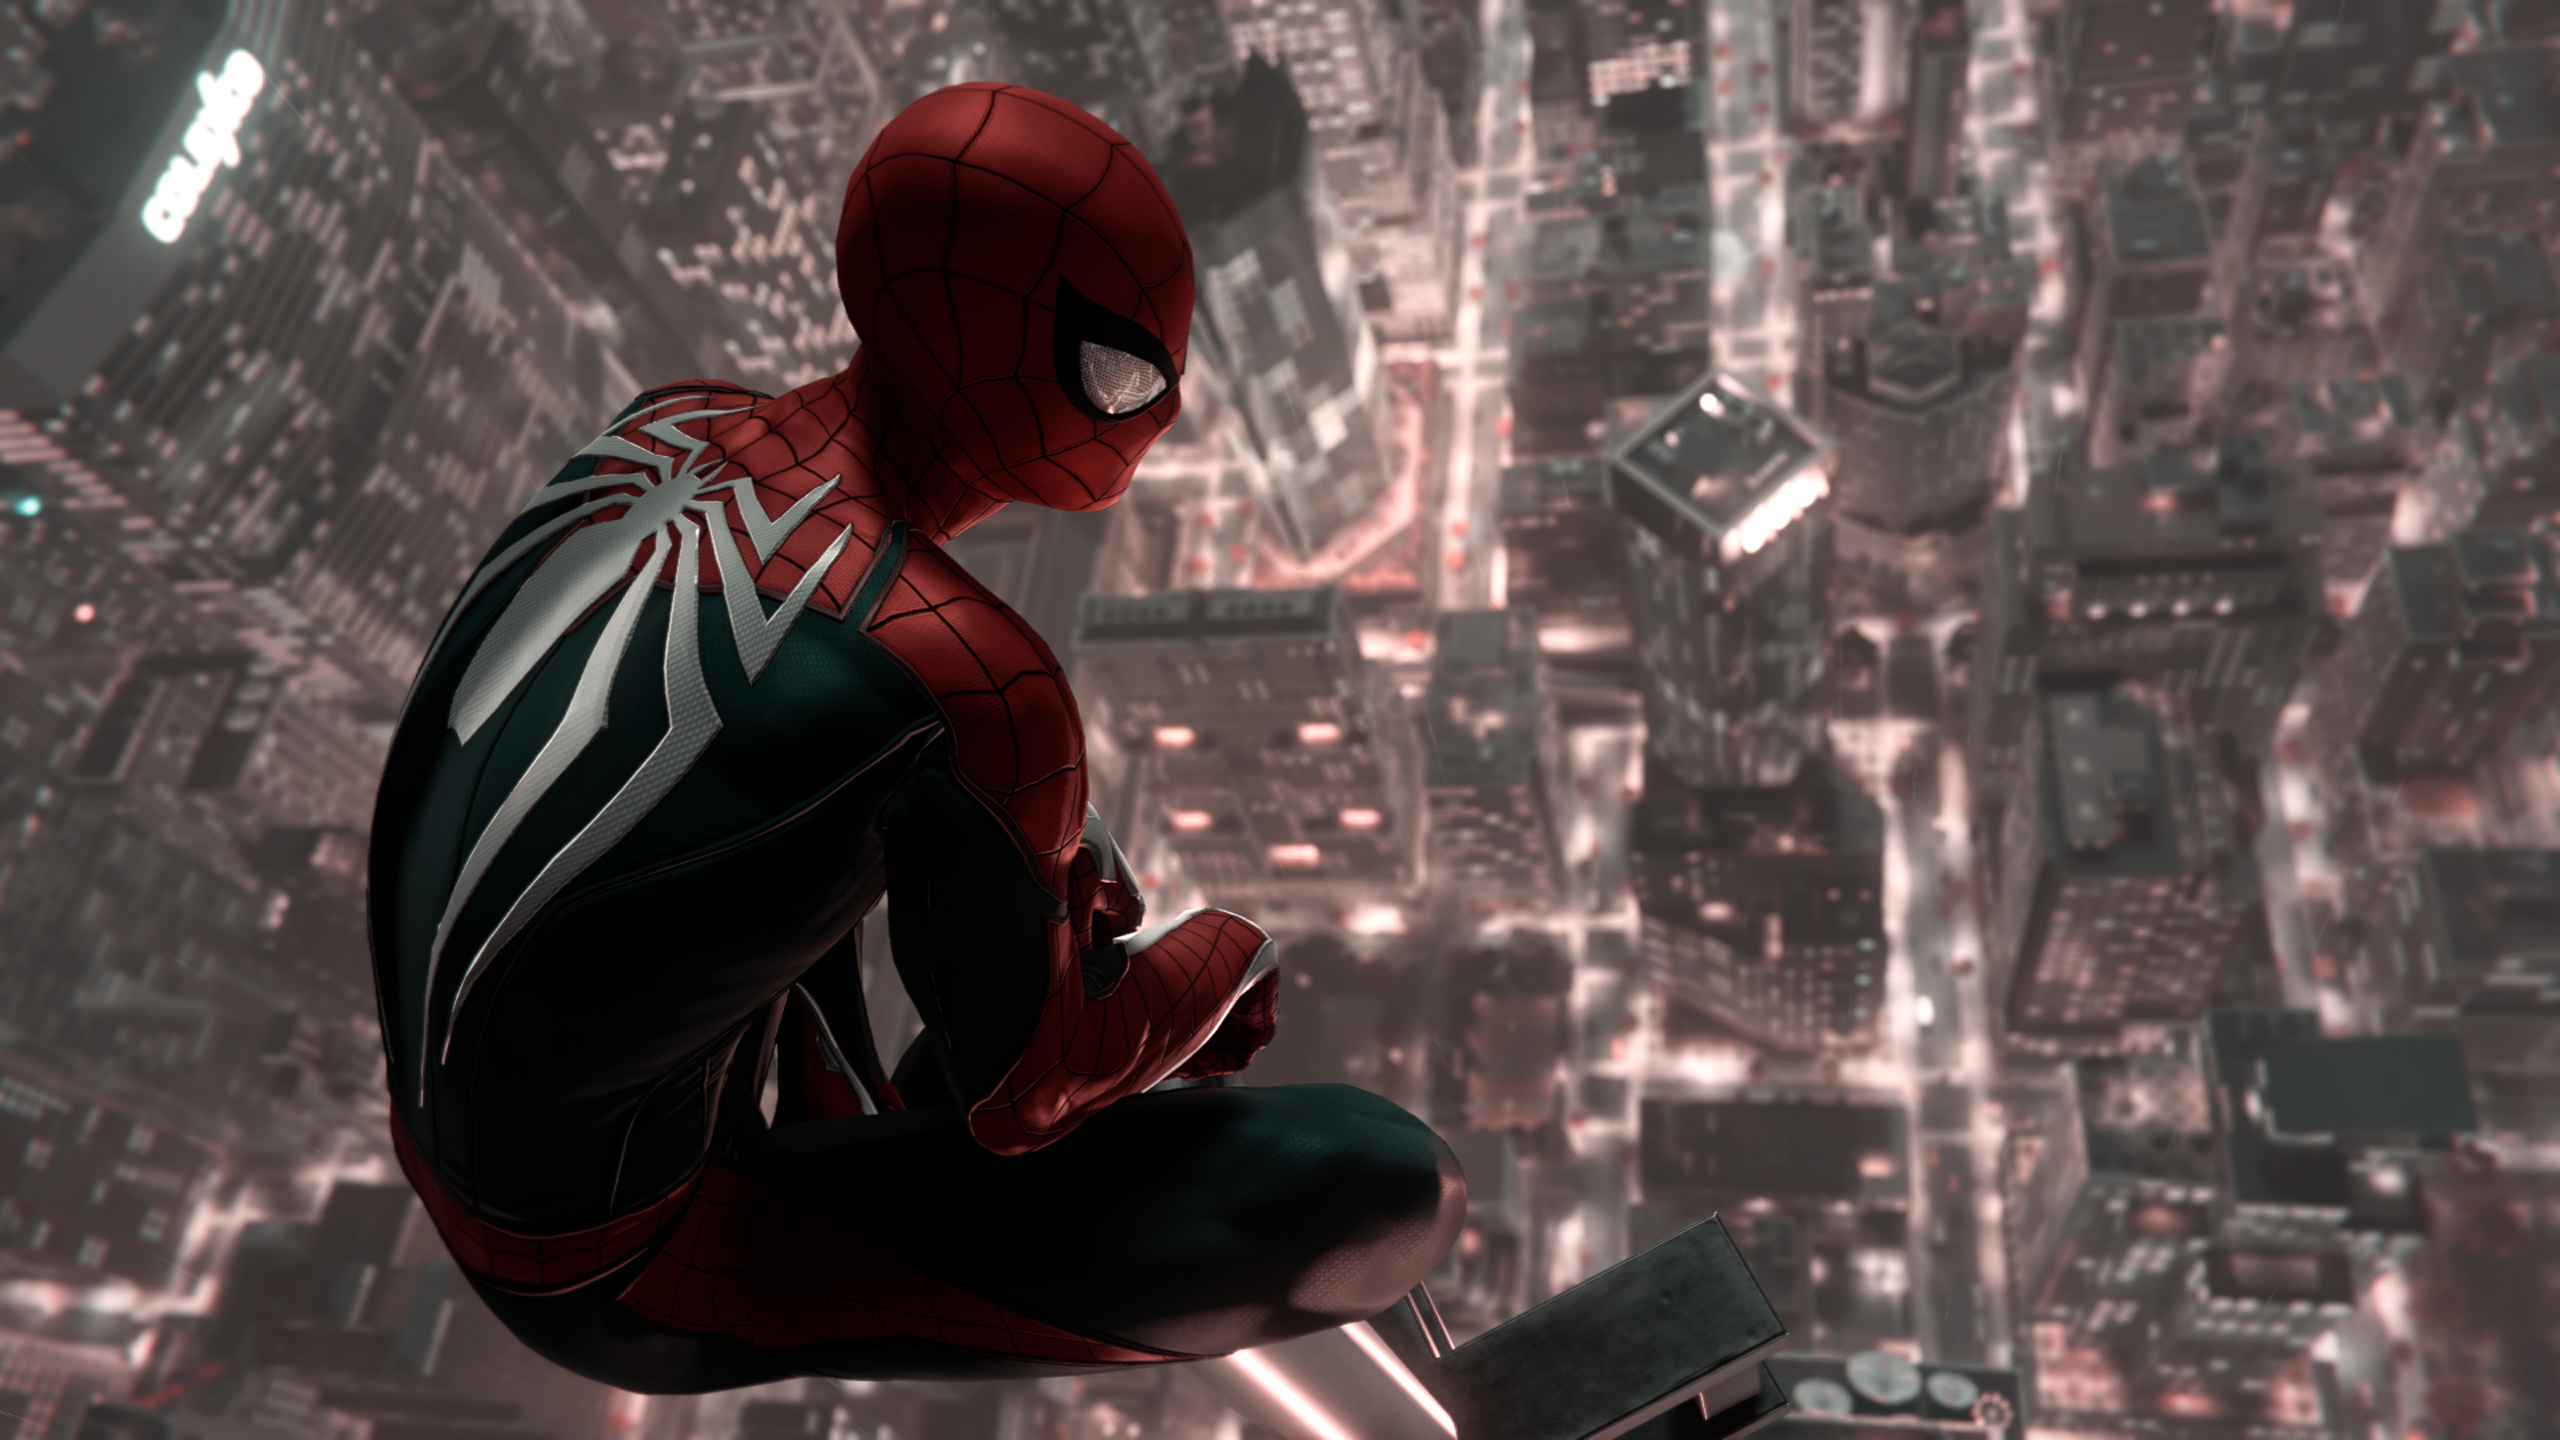 ps4 wallpaper,superhero,spider man,fictional character,action adventure game,batman